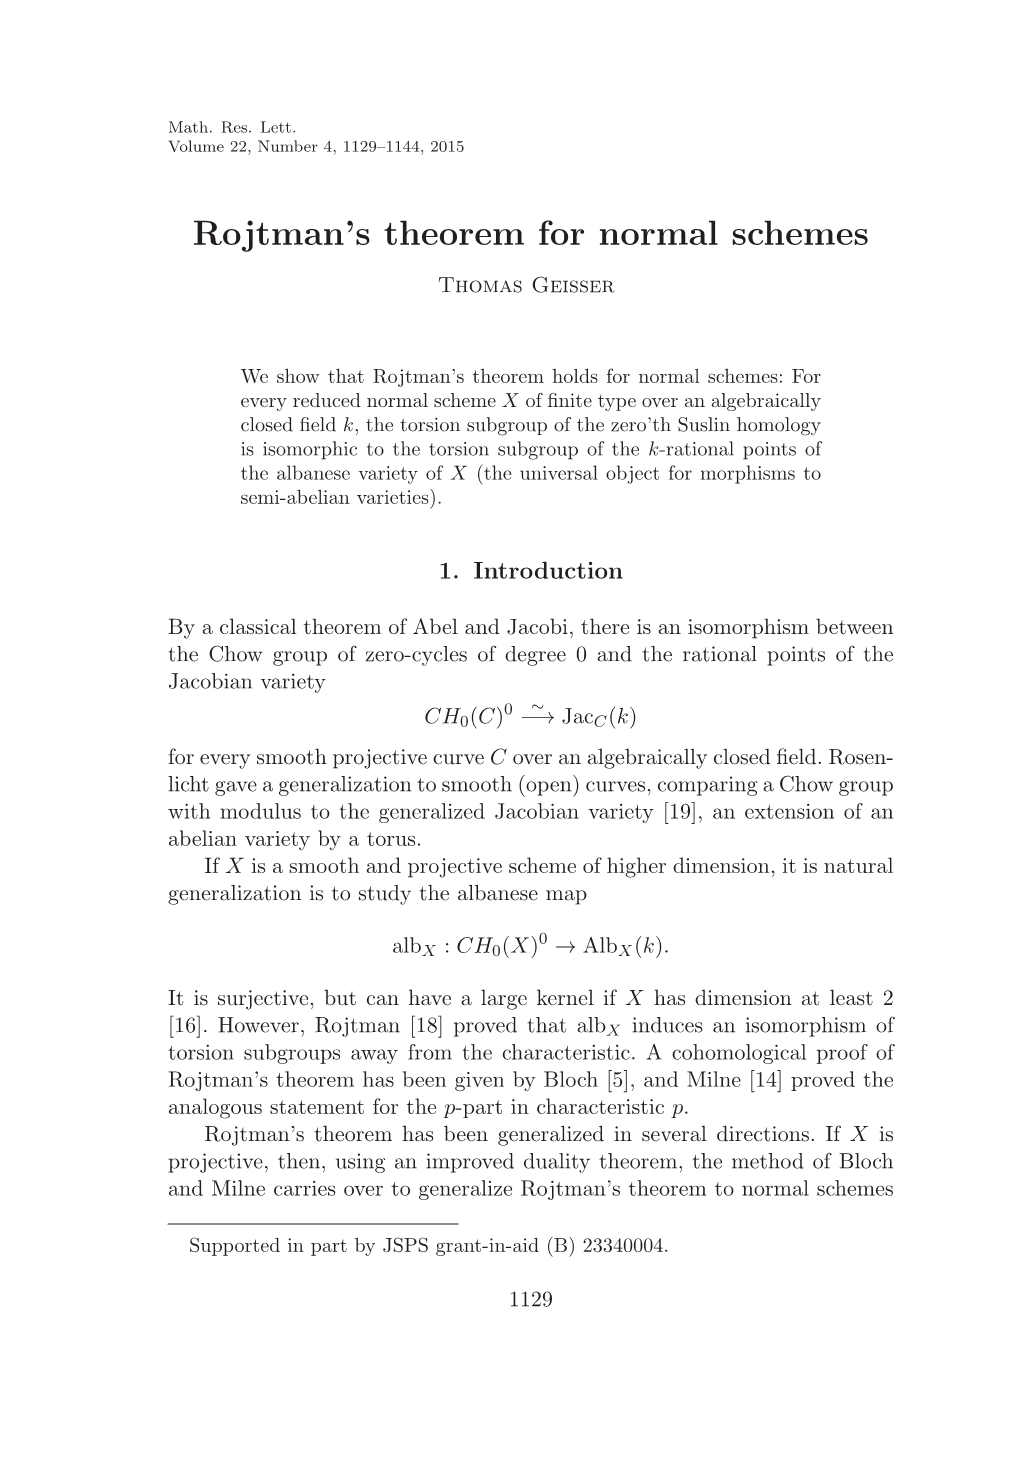 Rojtman's Theorem for Normal Schemes